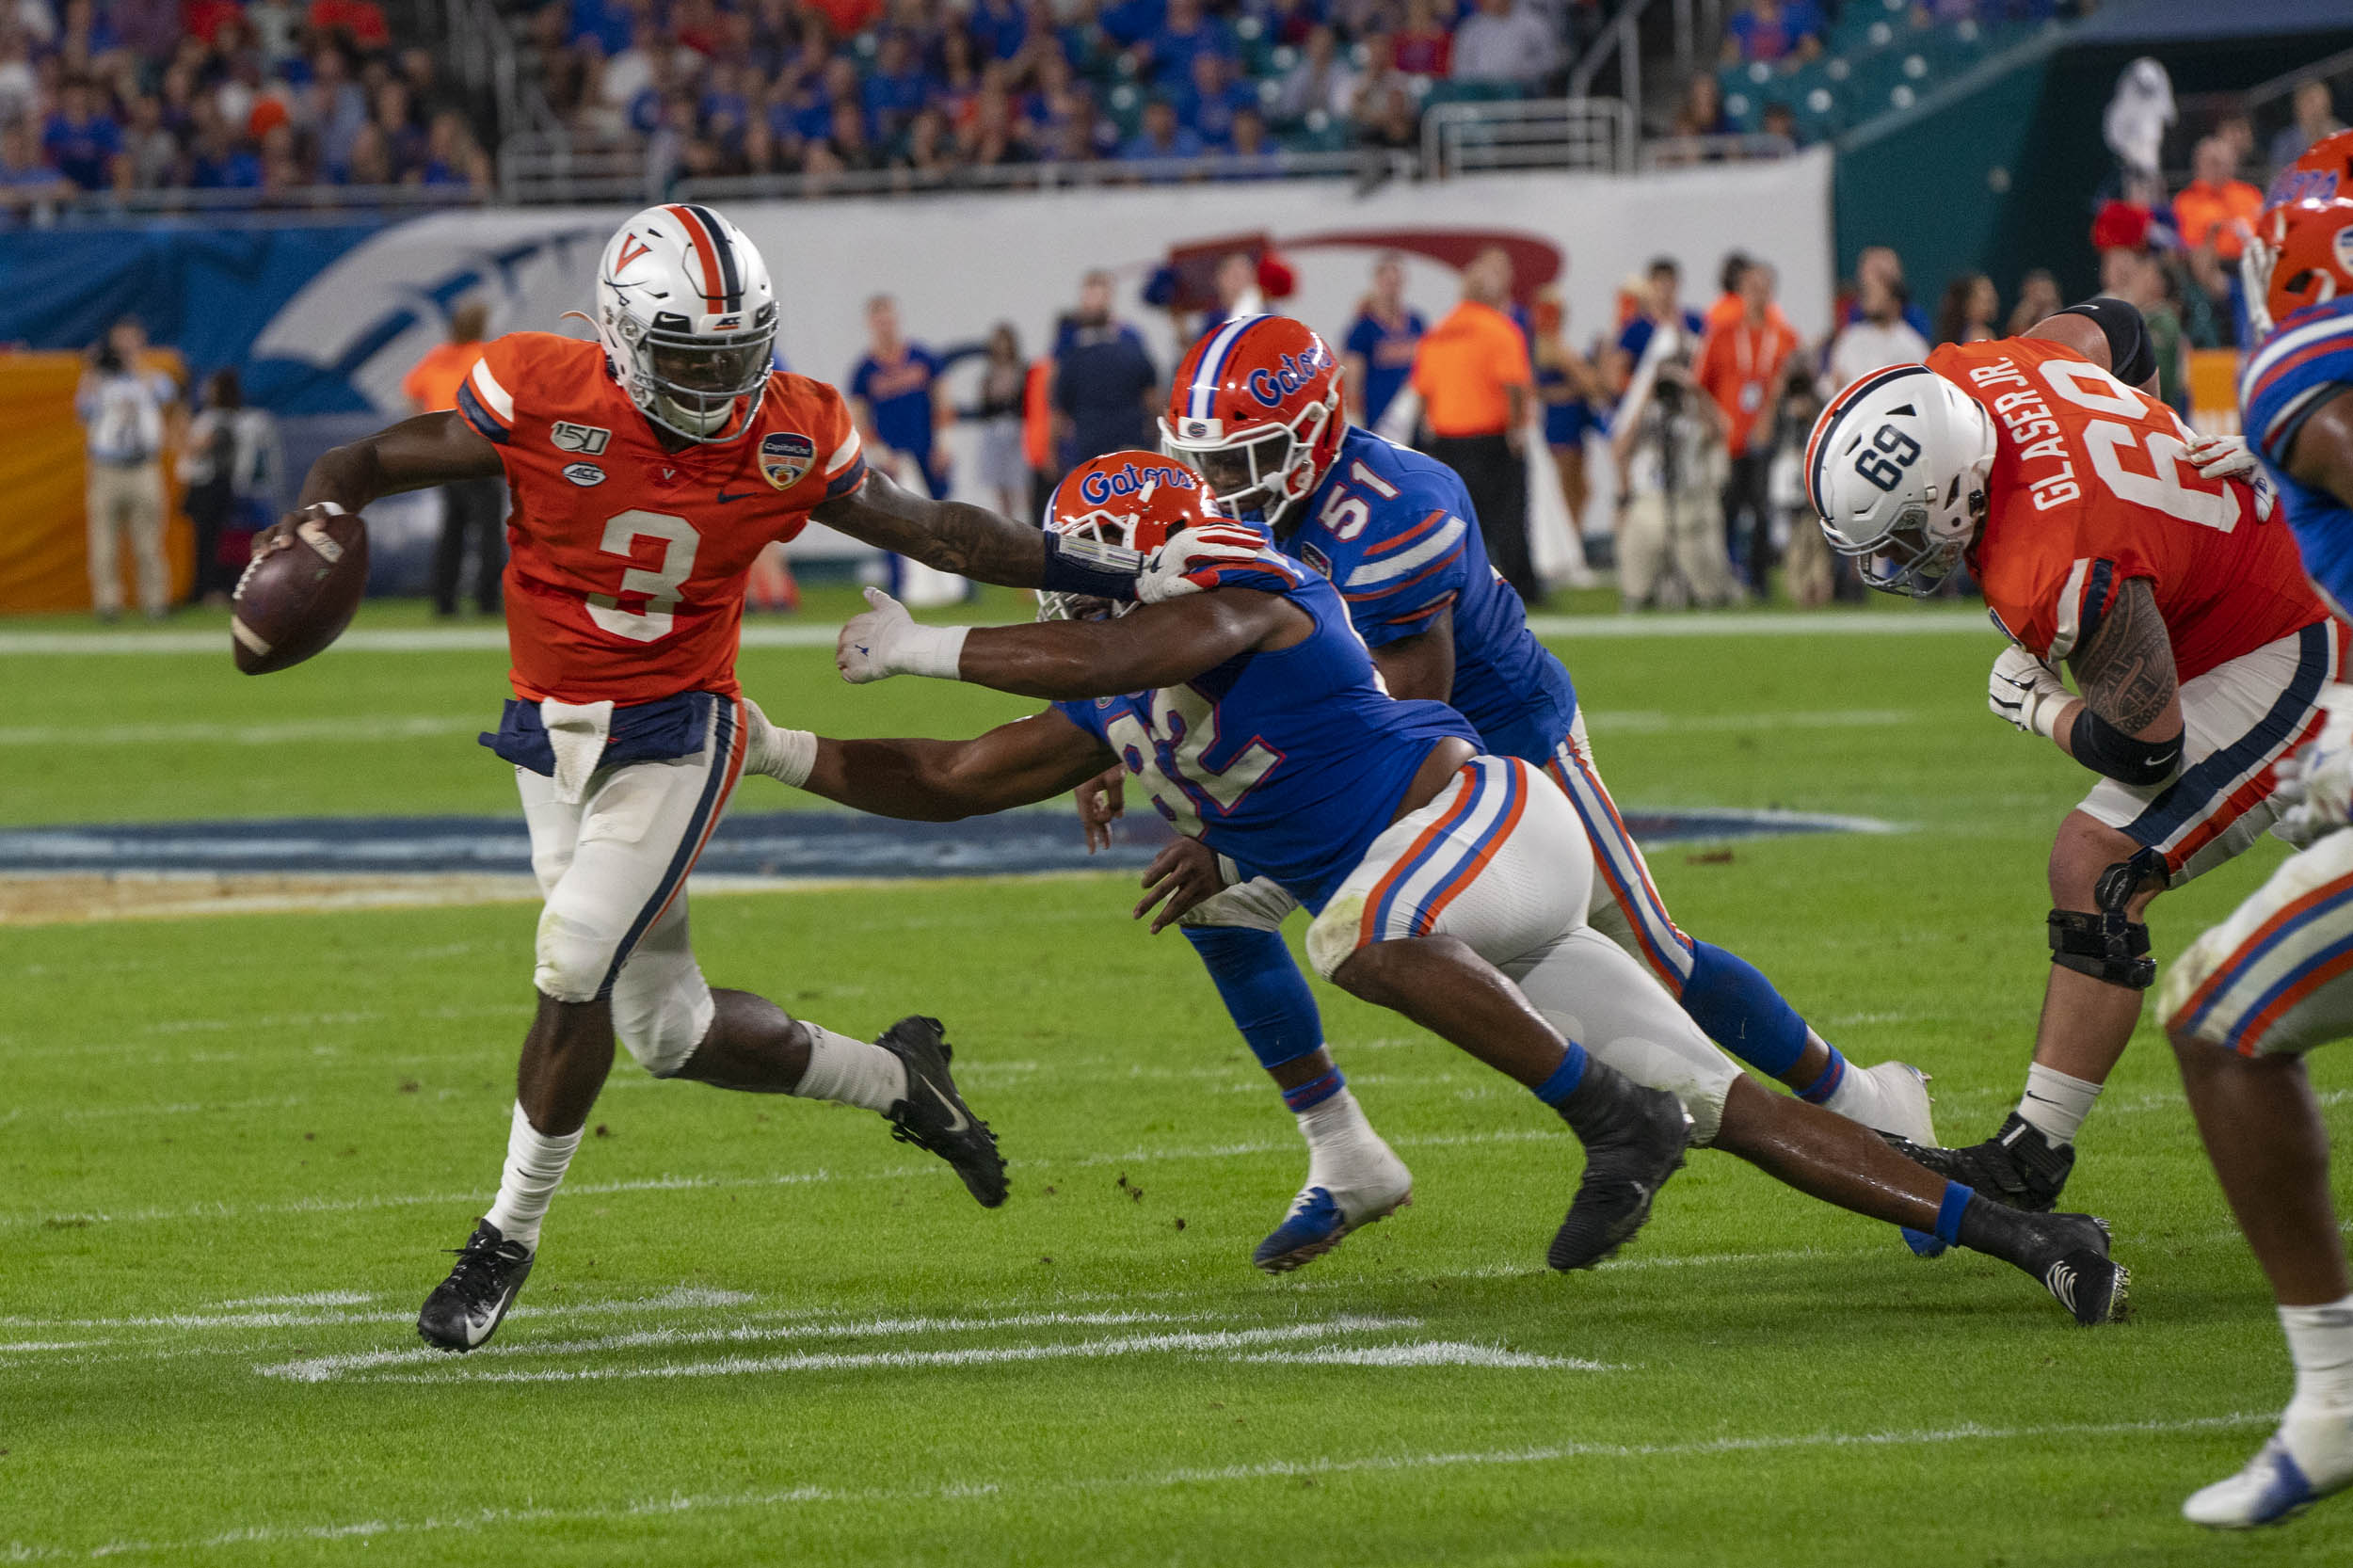 Perkins running away from a Florida defender 